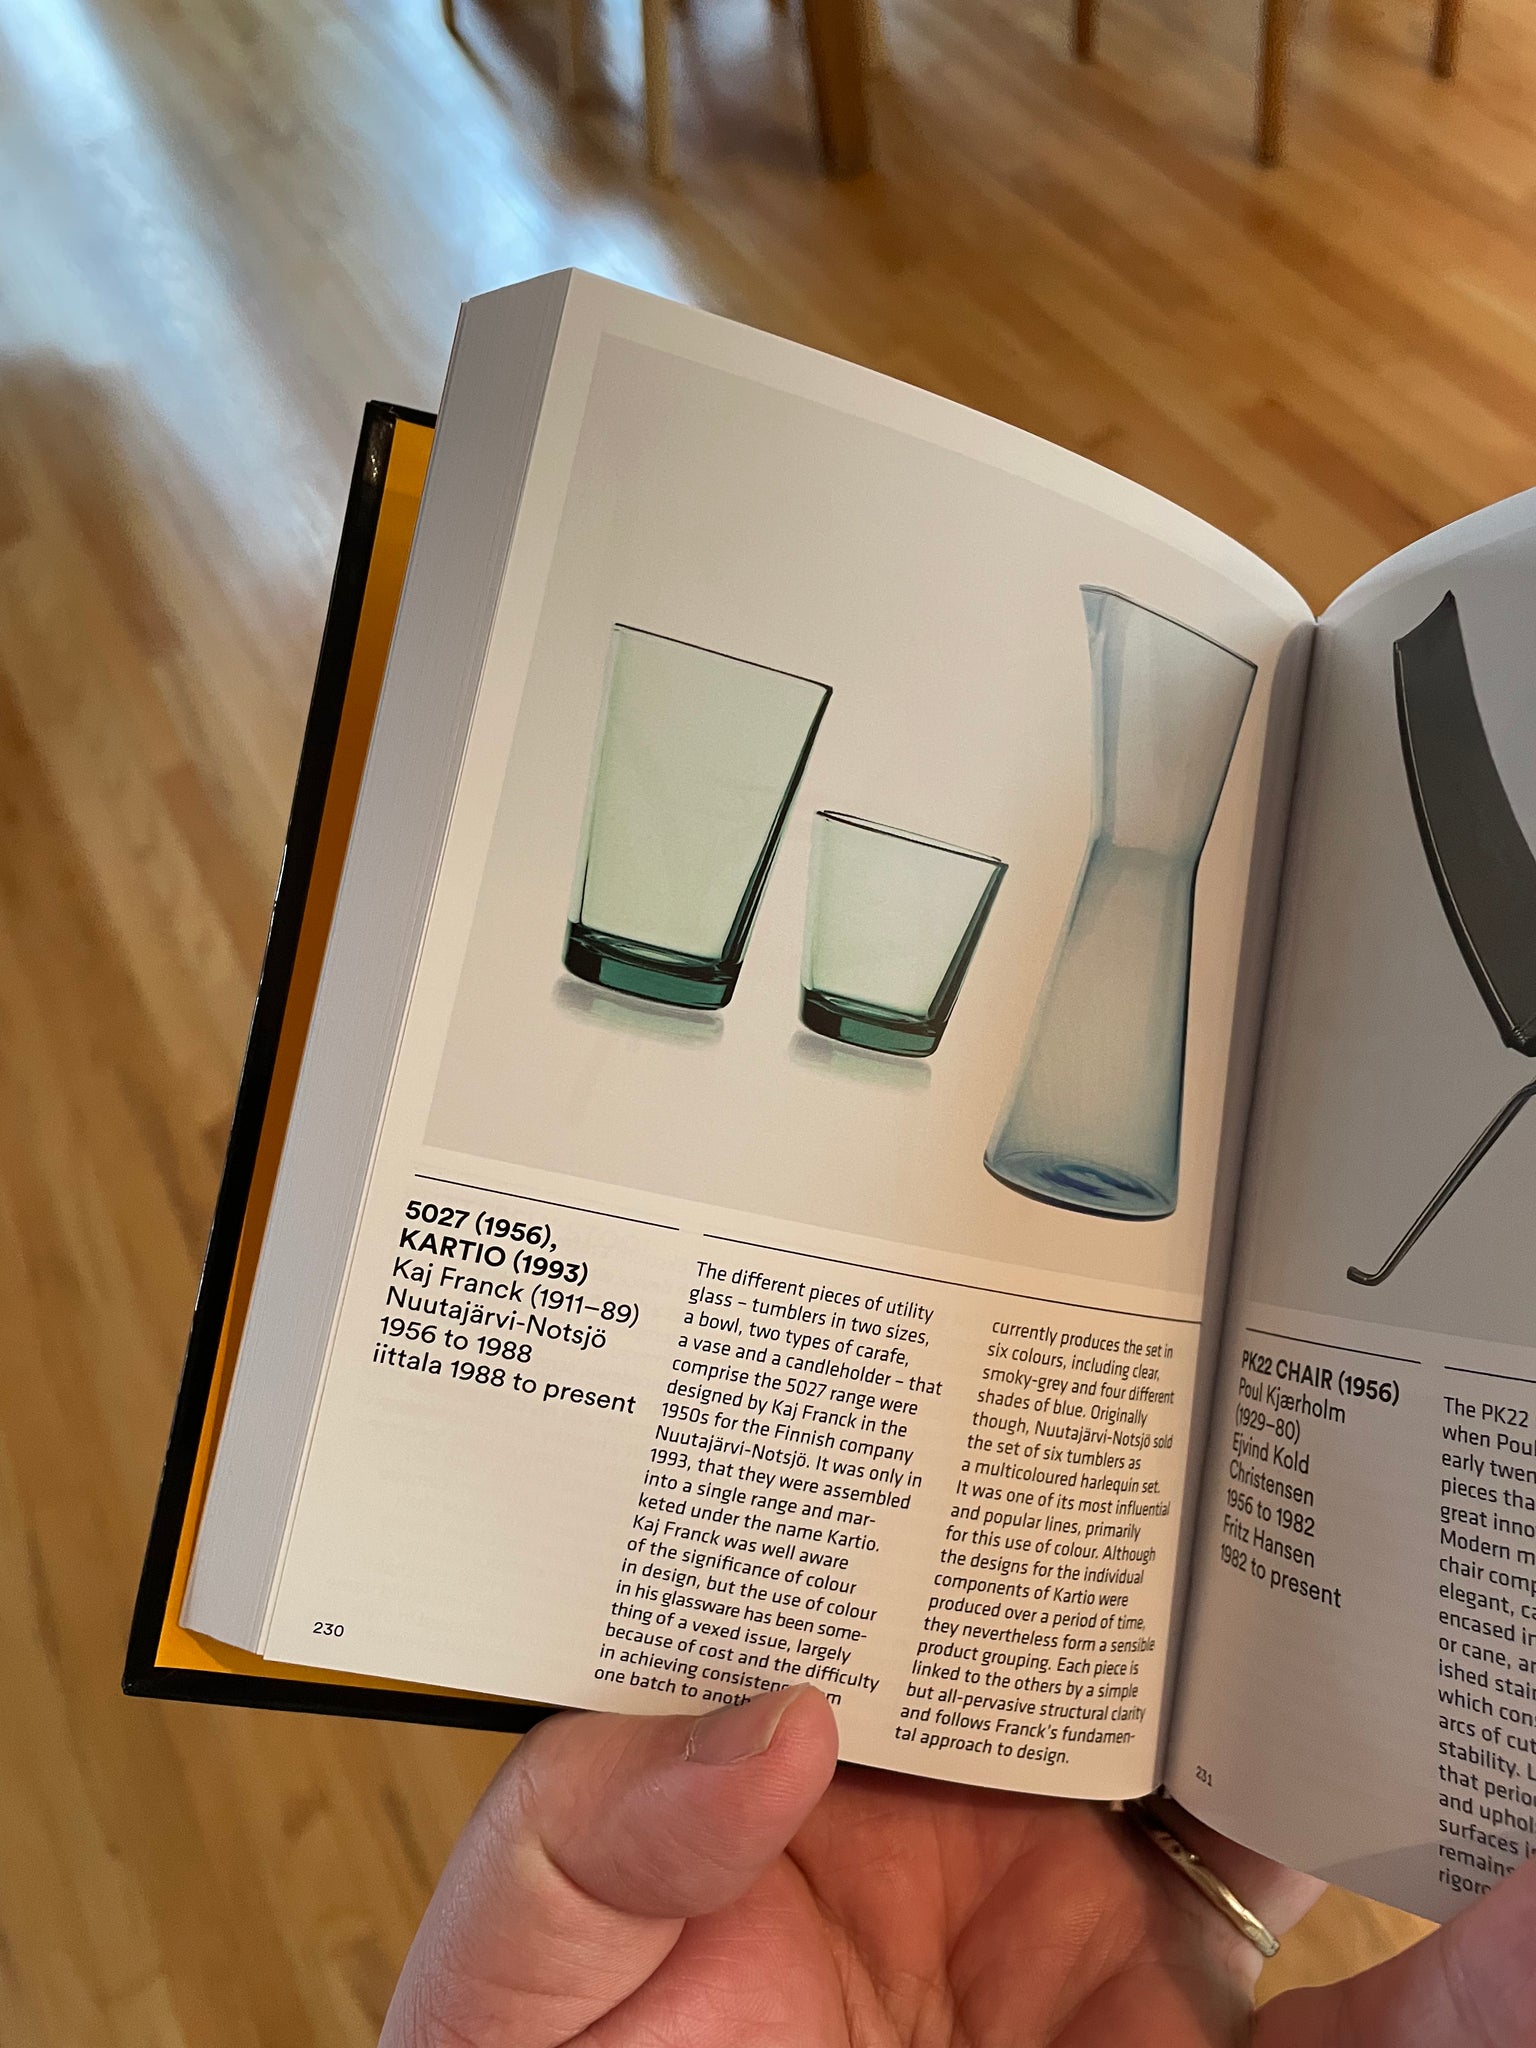 The Design Book, New Edition